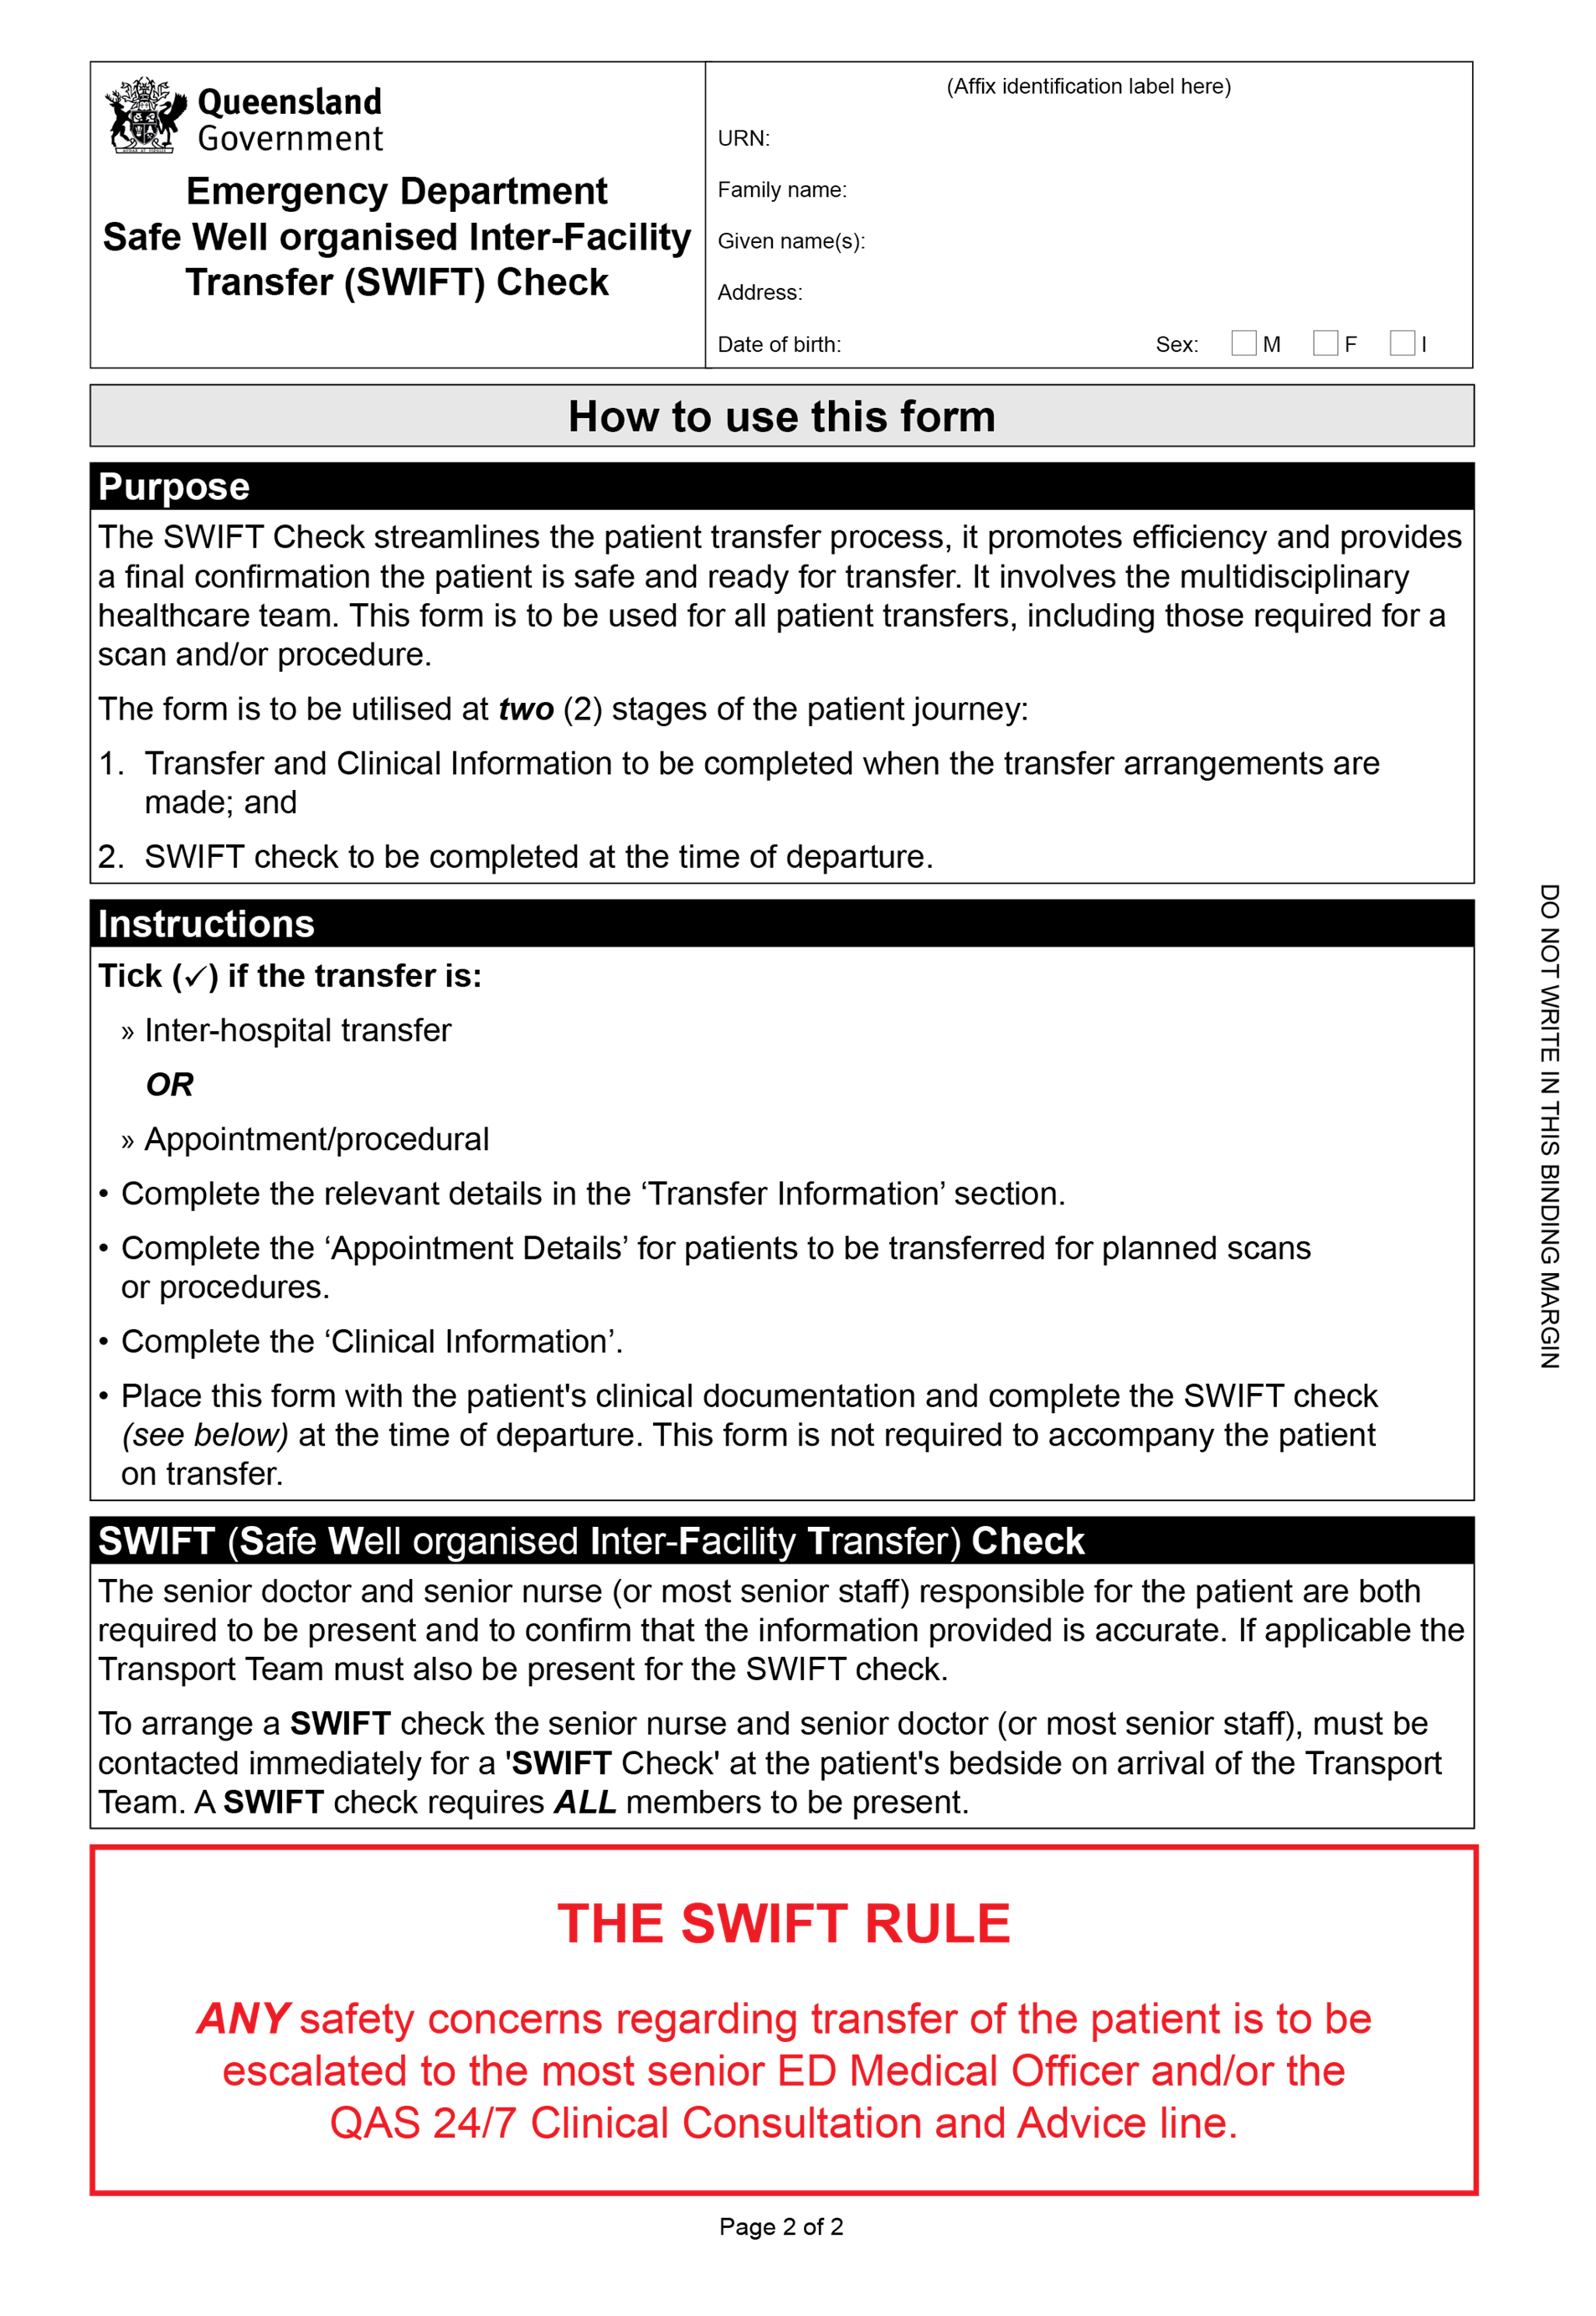 Appendix 4: SWIFT Check form 2